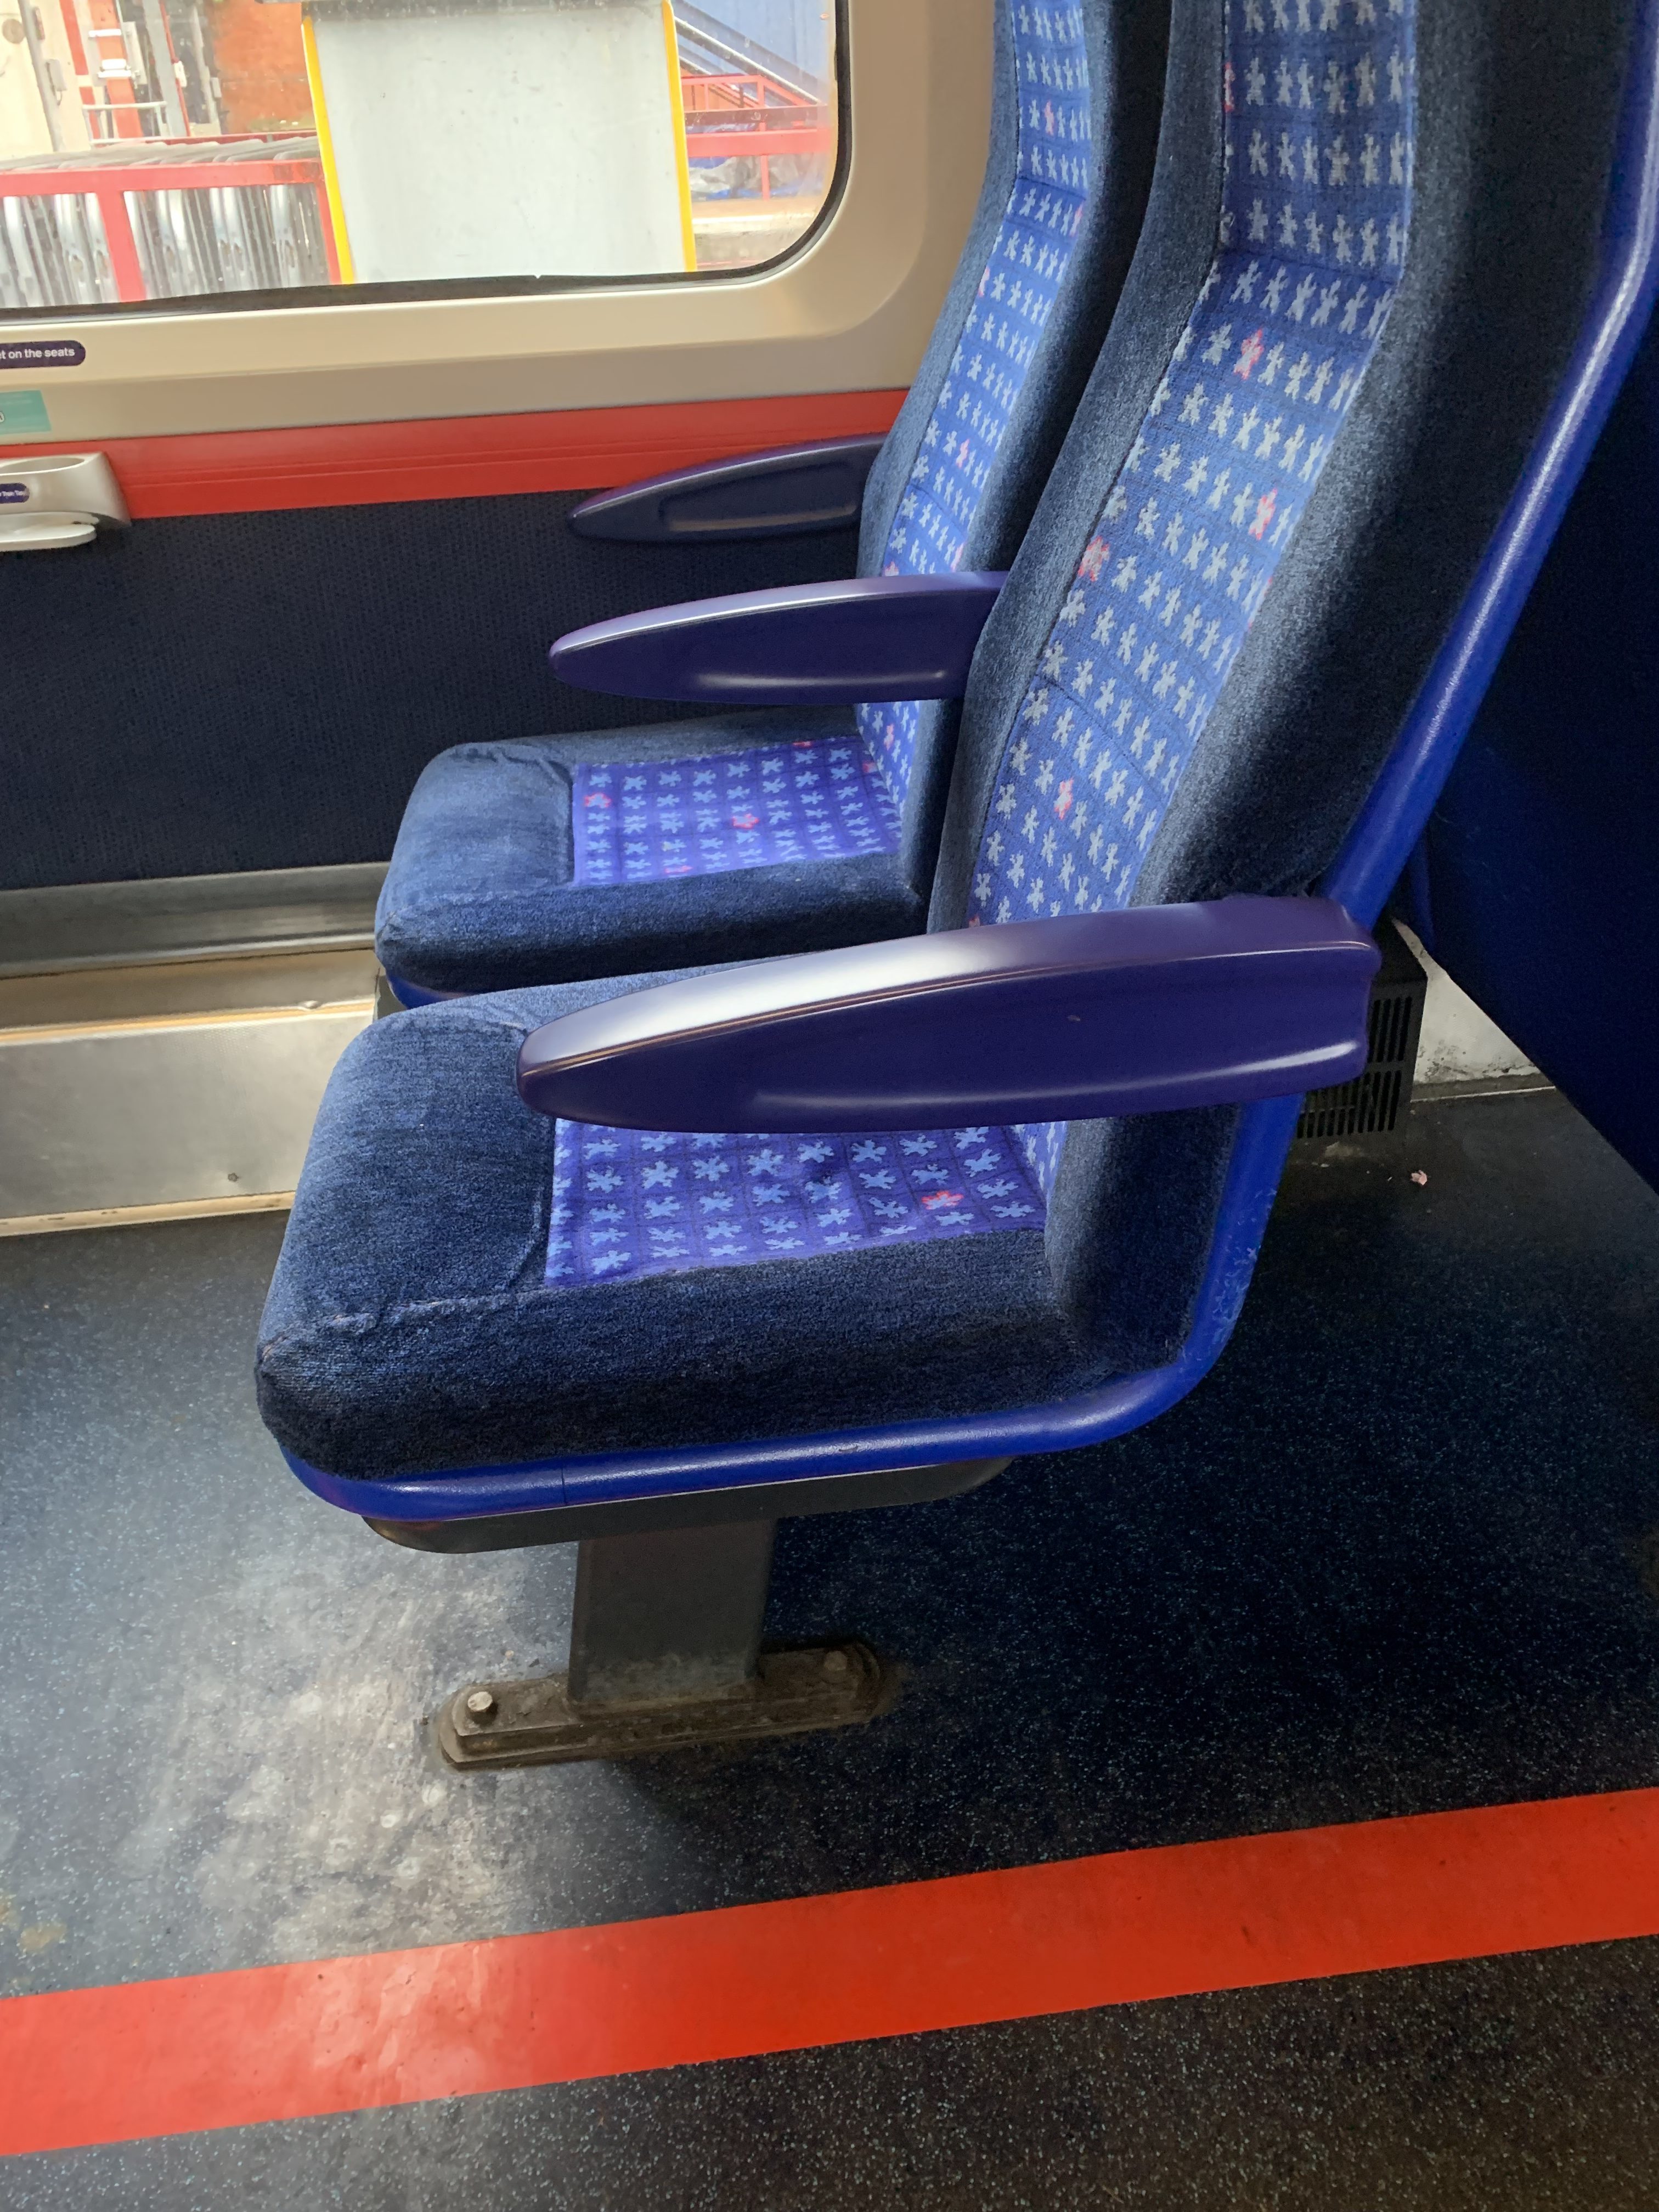 3D printed armrests on Chiltern Railways trains. Photo via Stratasys.